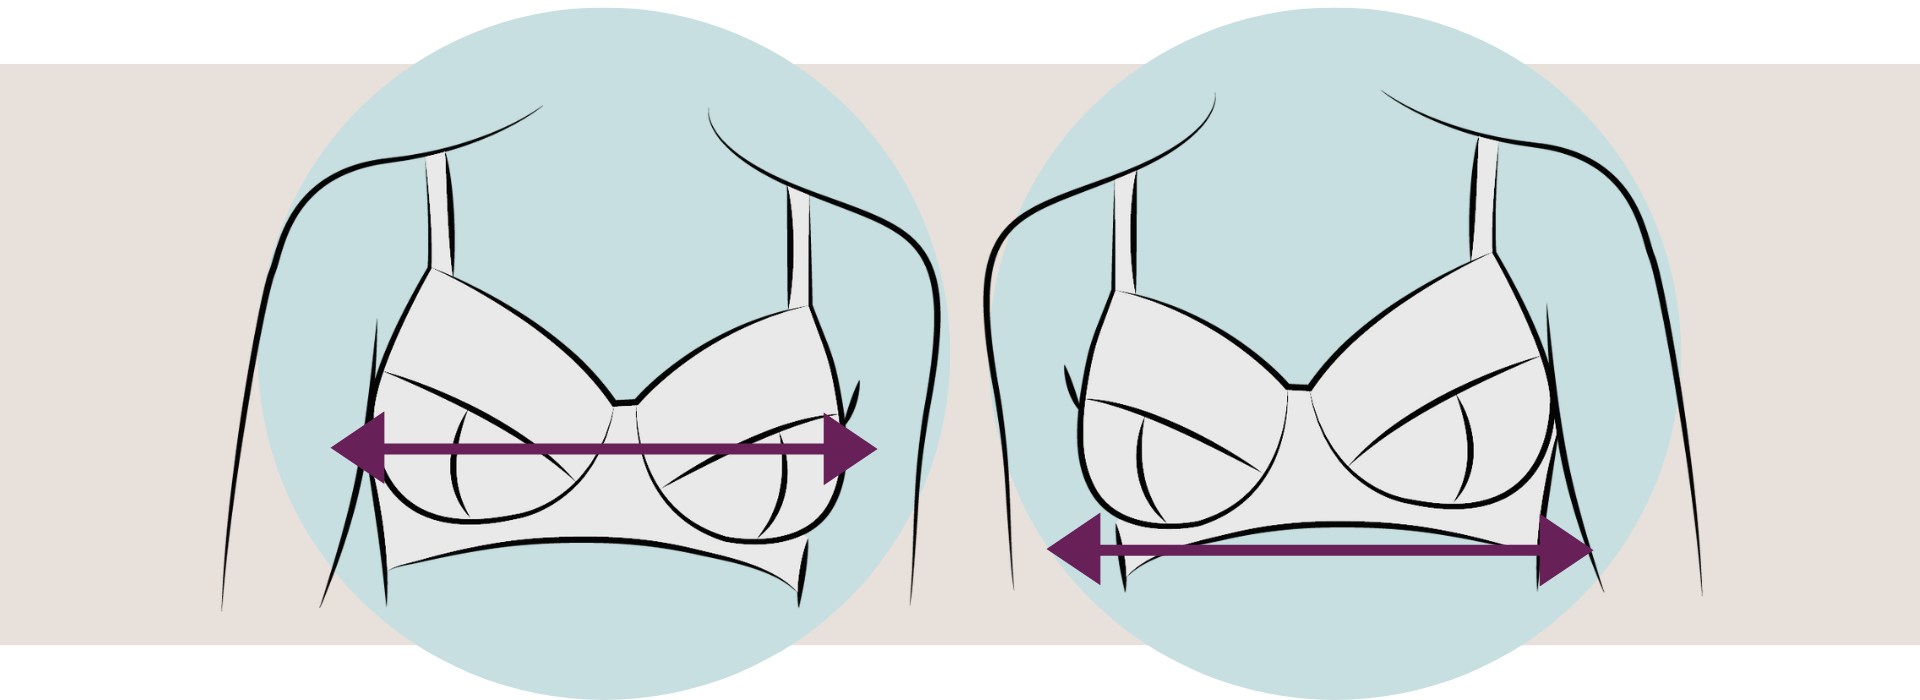 Mastectomy Bra Fitting Guide  Video Tutorial by MrBra.com (Part 6